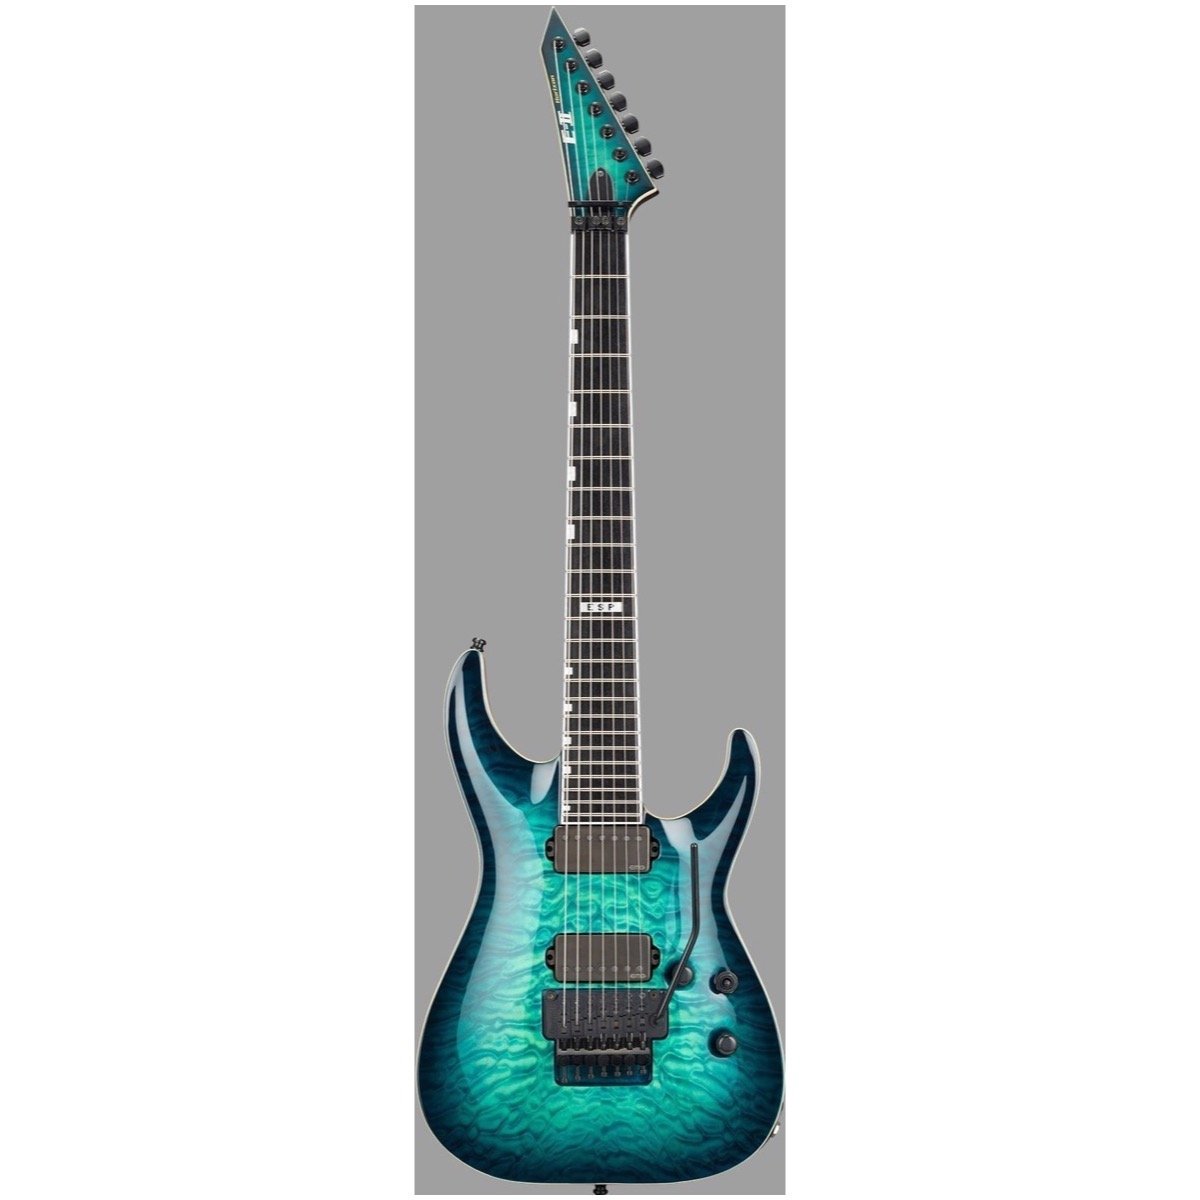 04.ESP_EII_Horizon_FR-7_Electric_Guitar_7-String_with_Case_Black_Turquoise_Burst.jpg